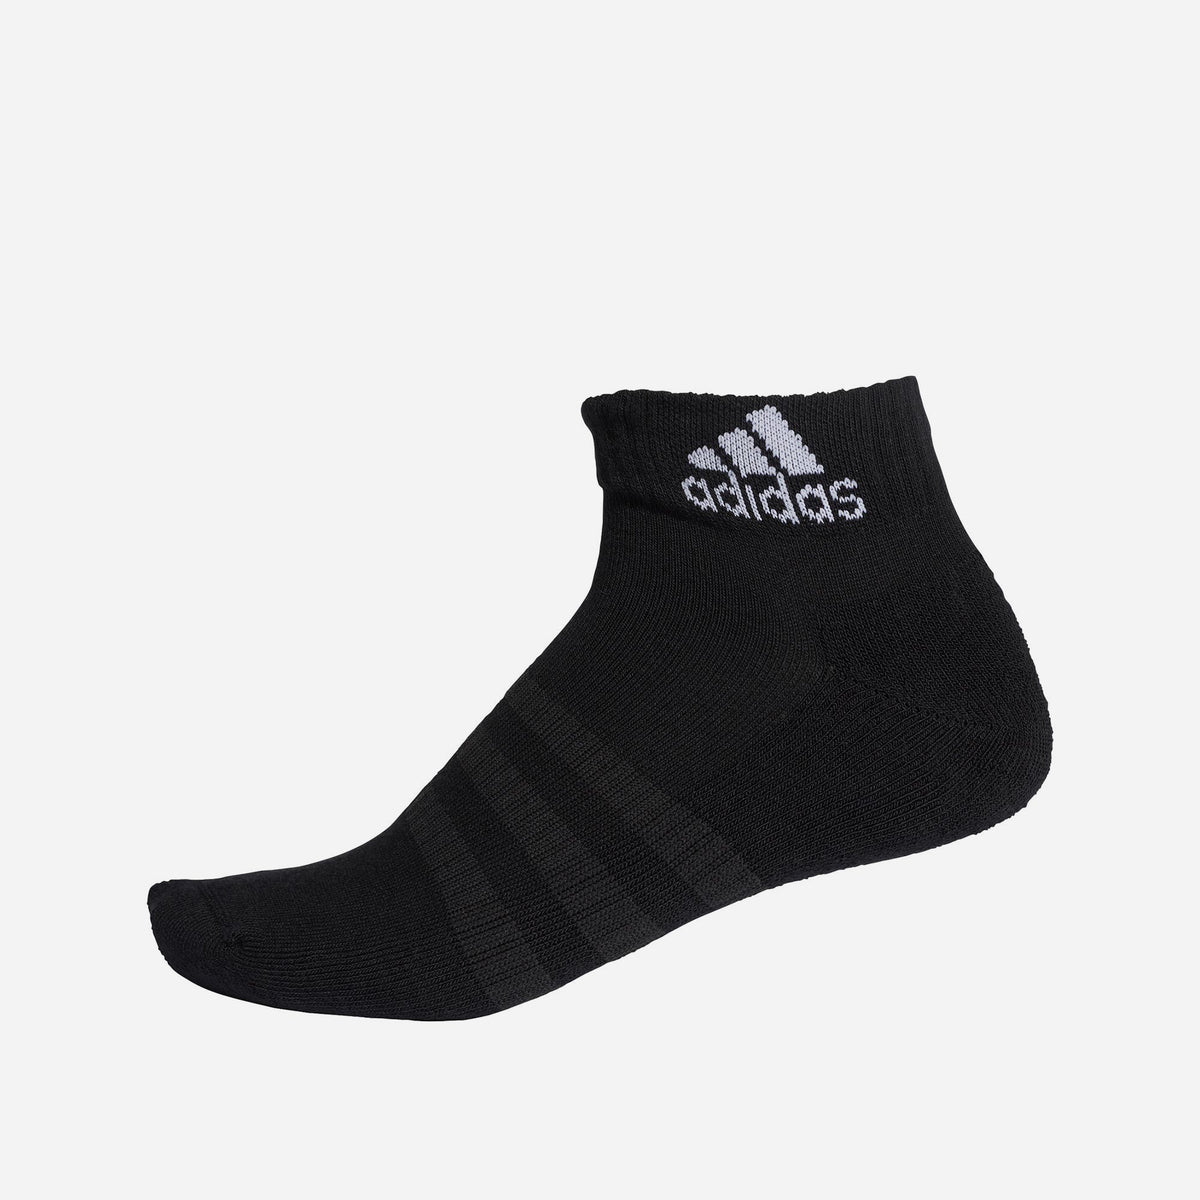 Vớ Adidas Cushion Ankle